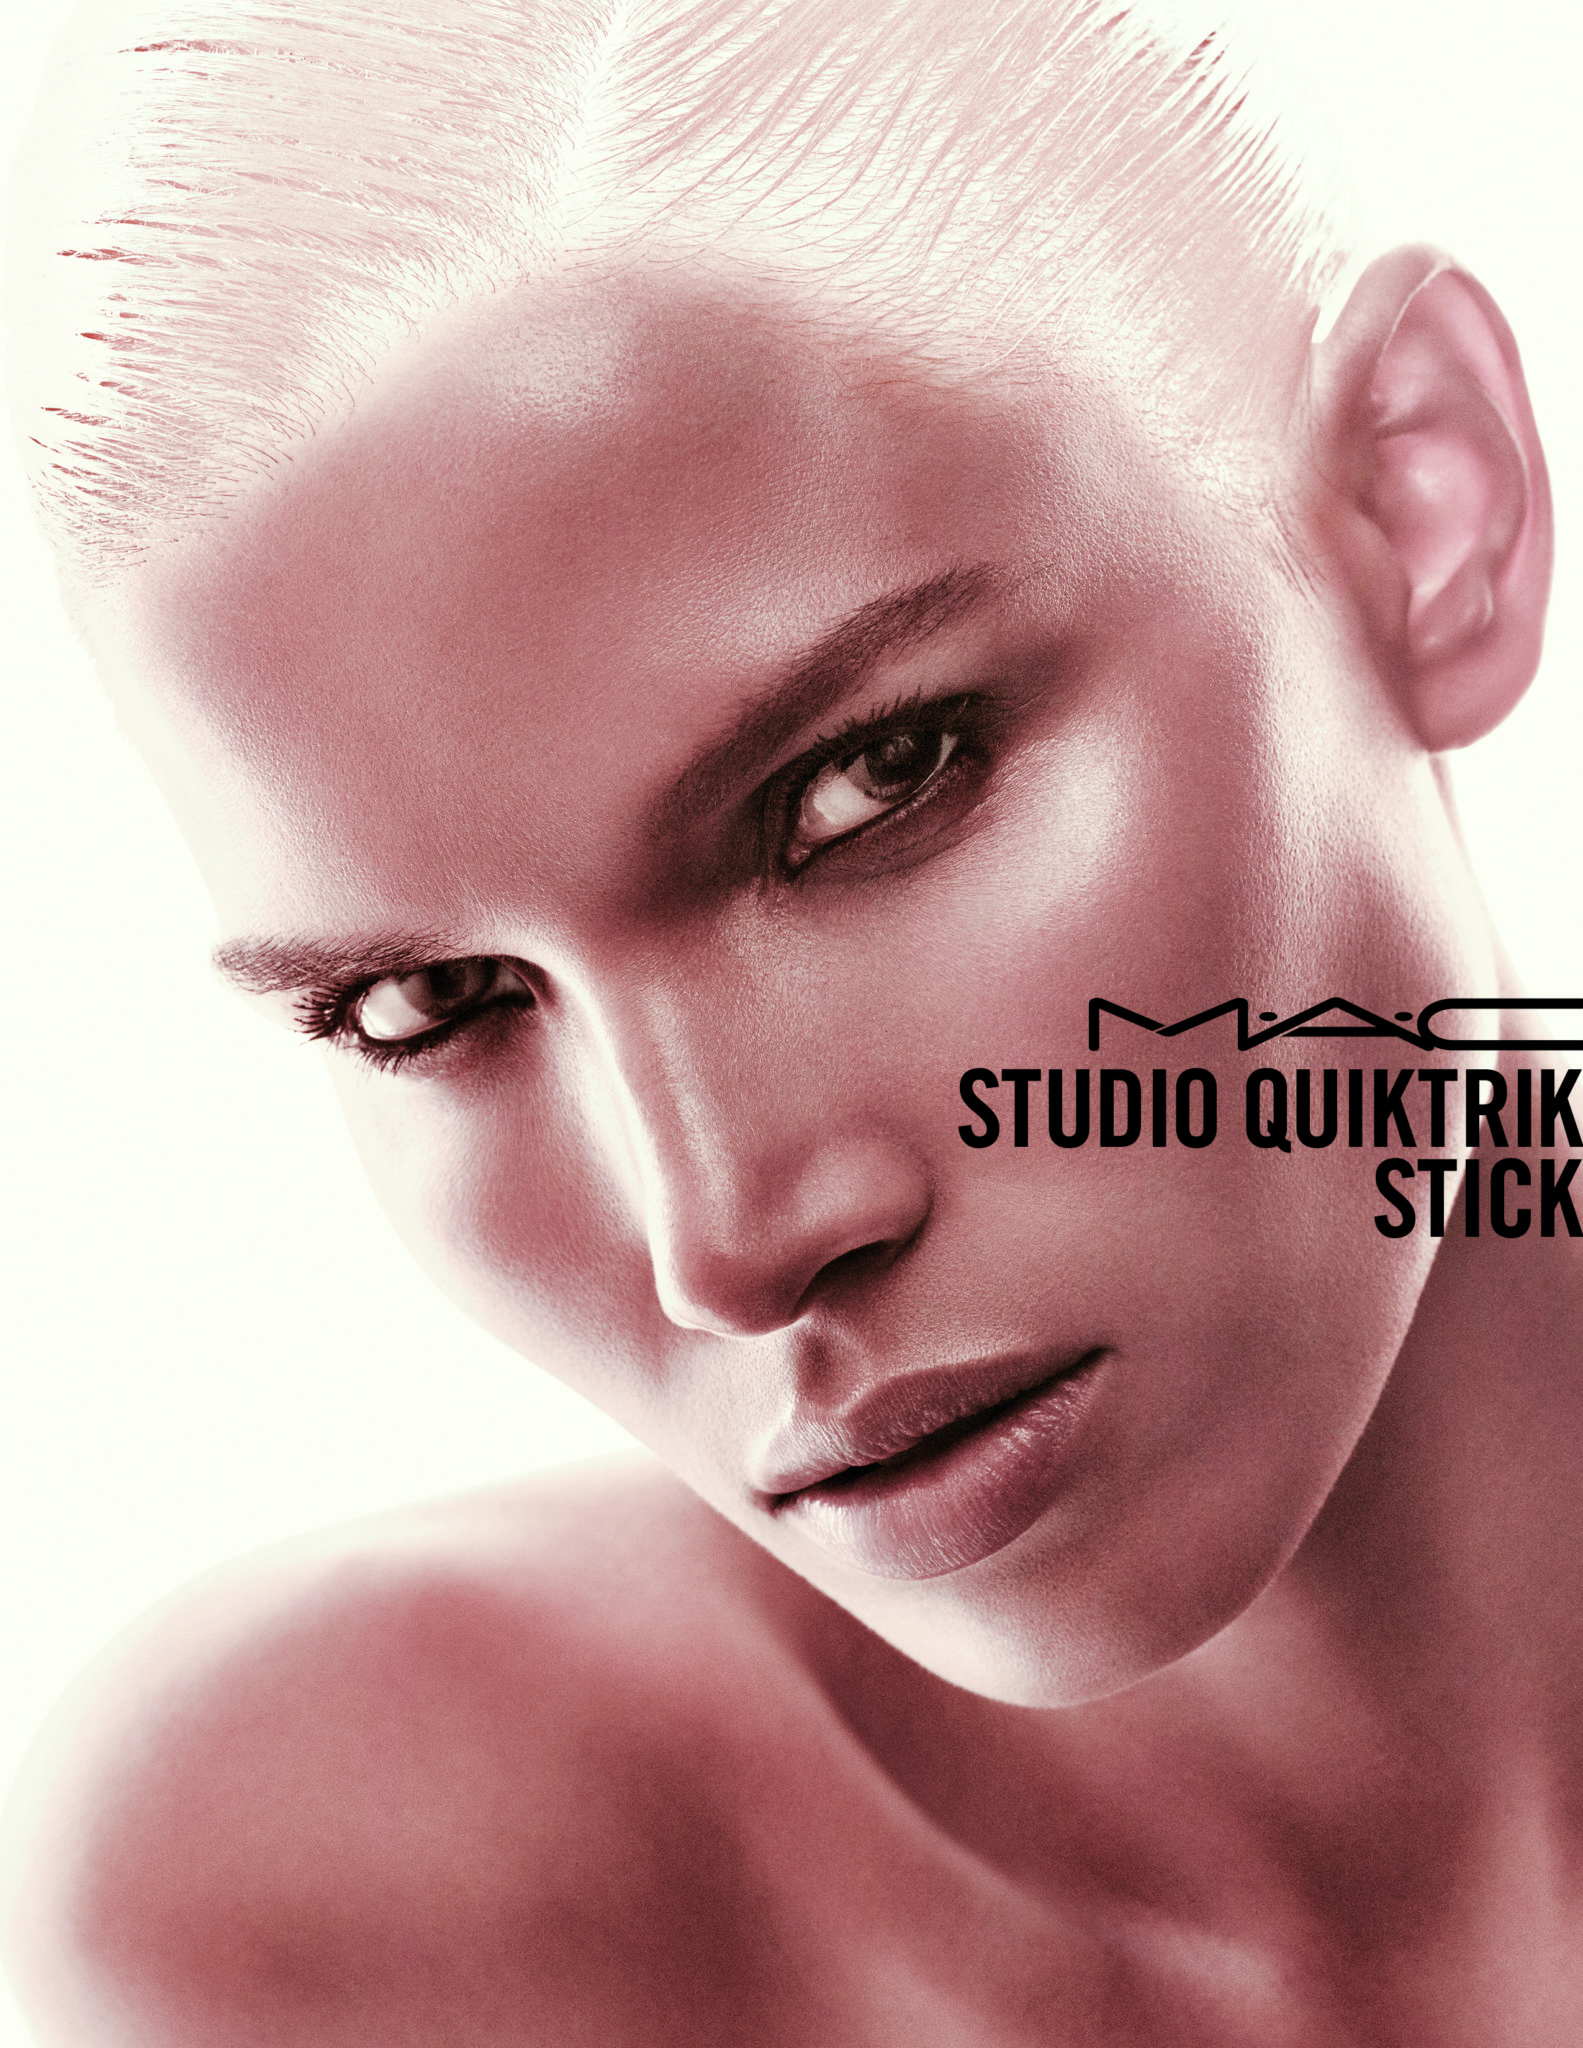 M.A.C. Presents: Studio QuickTrik Stick